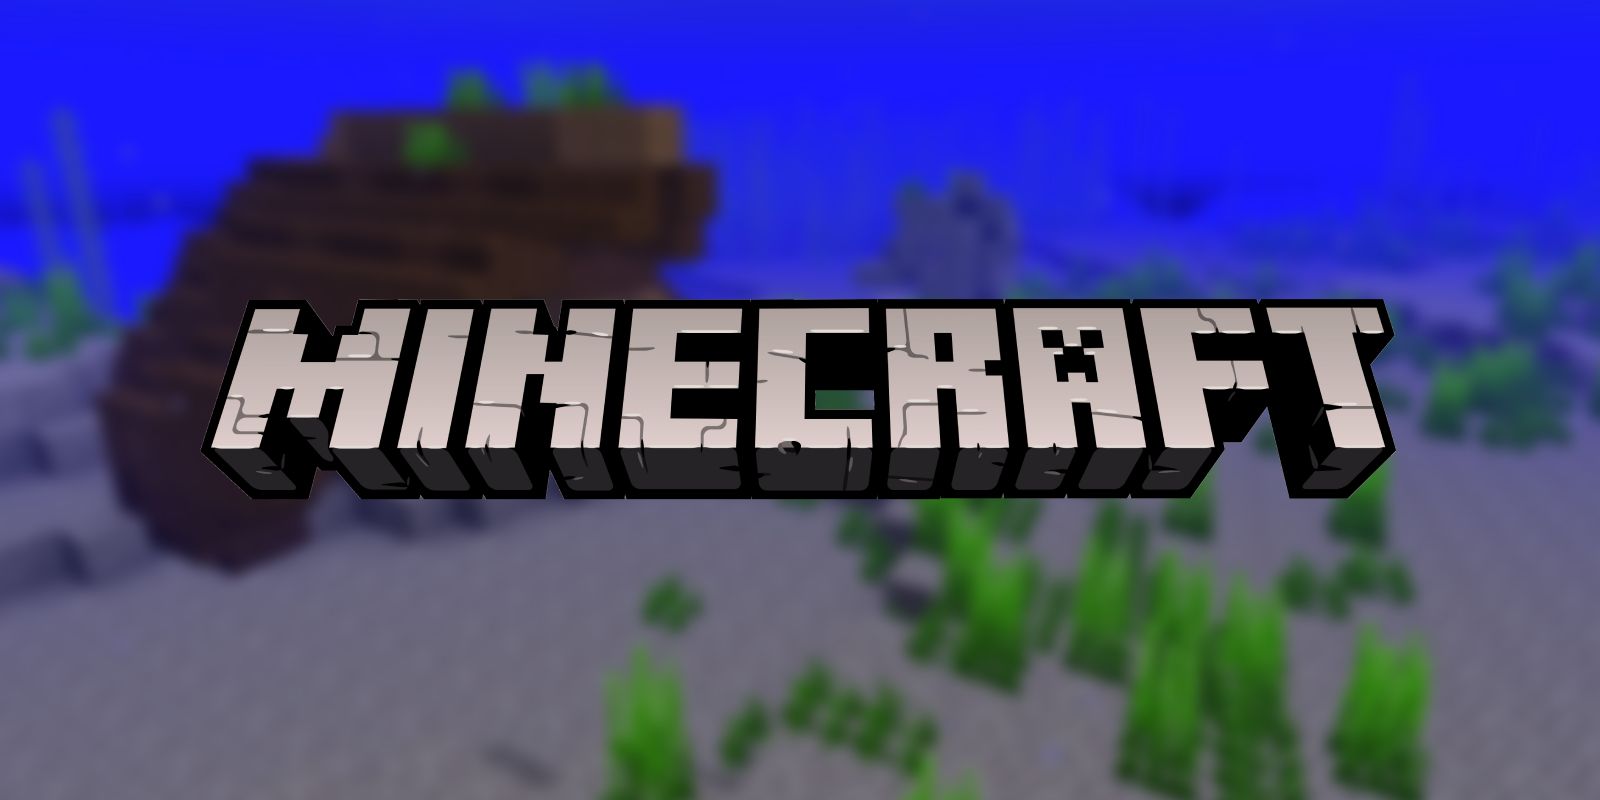 The Minecraft logo